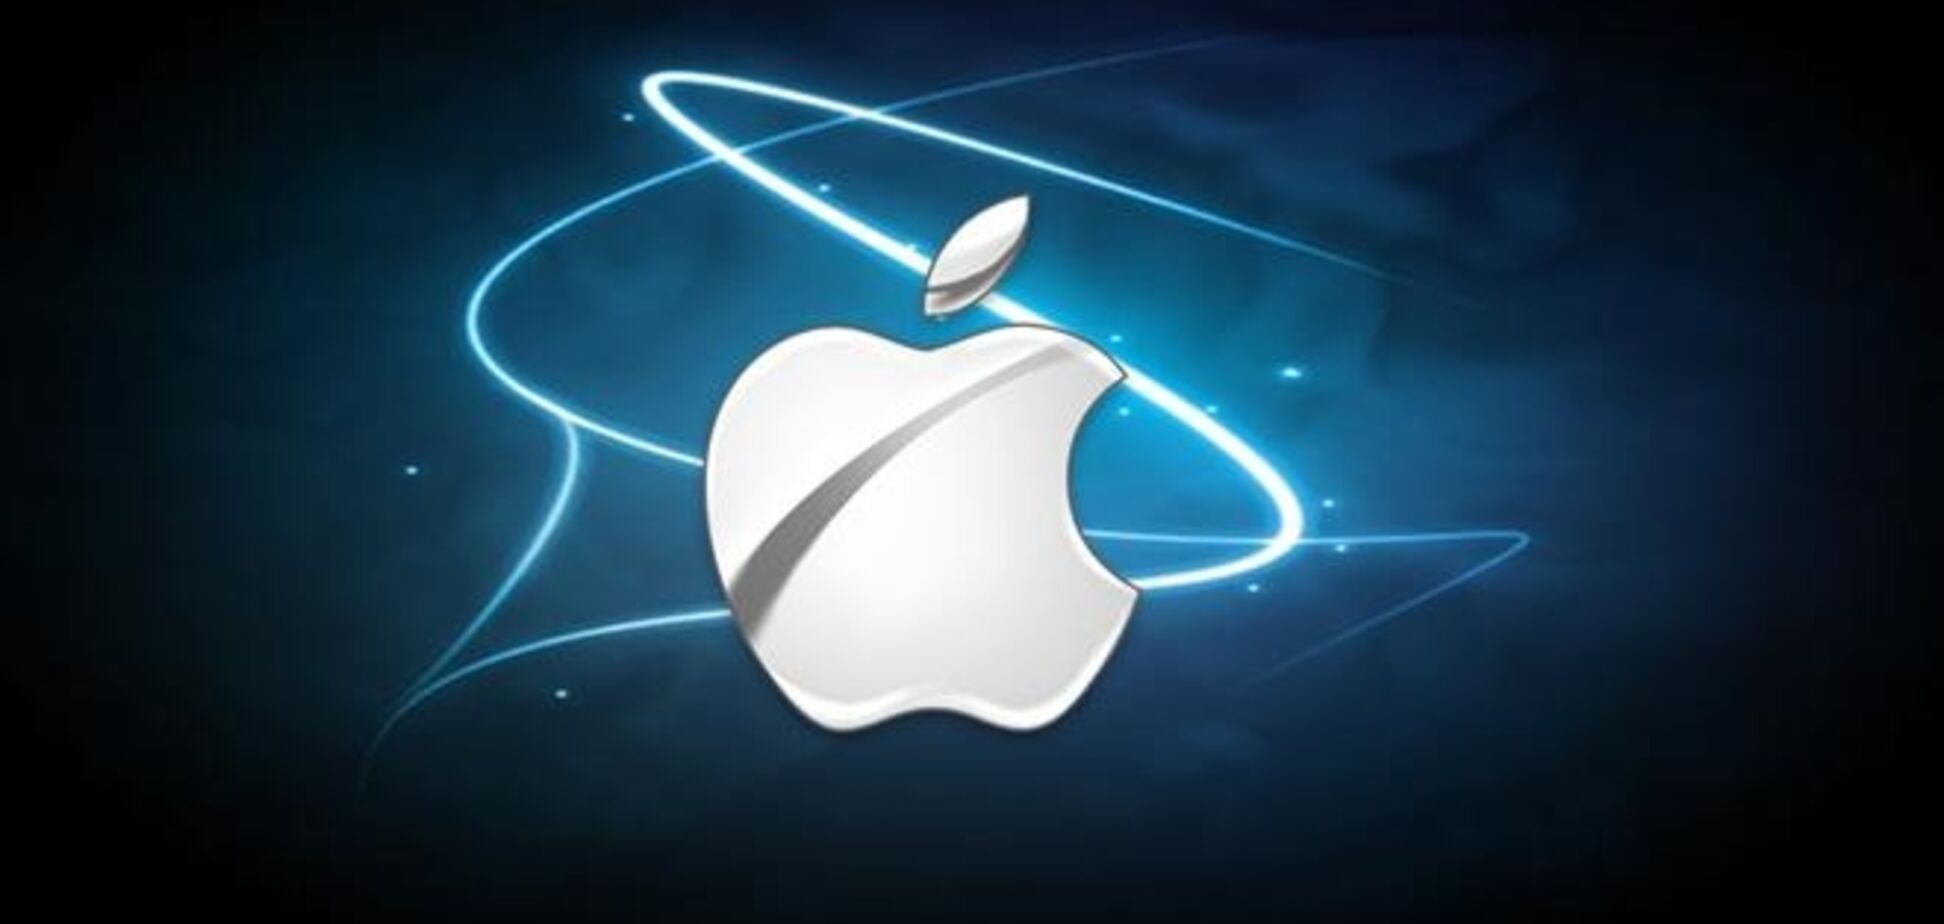 Apple признана самым дорогим брендом в мире